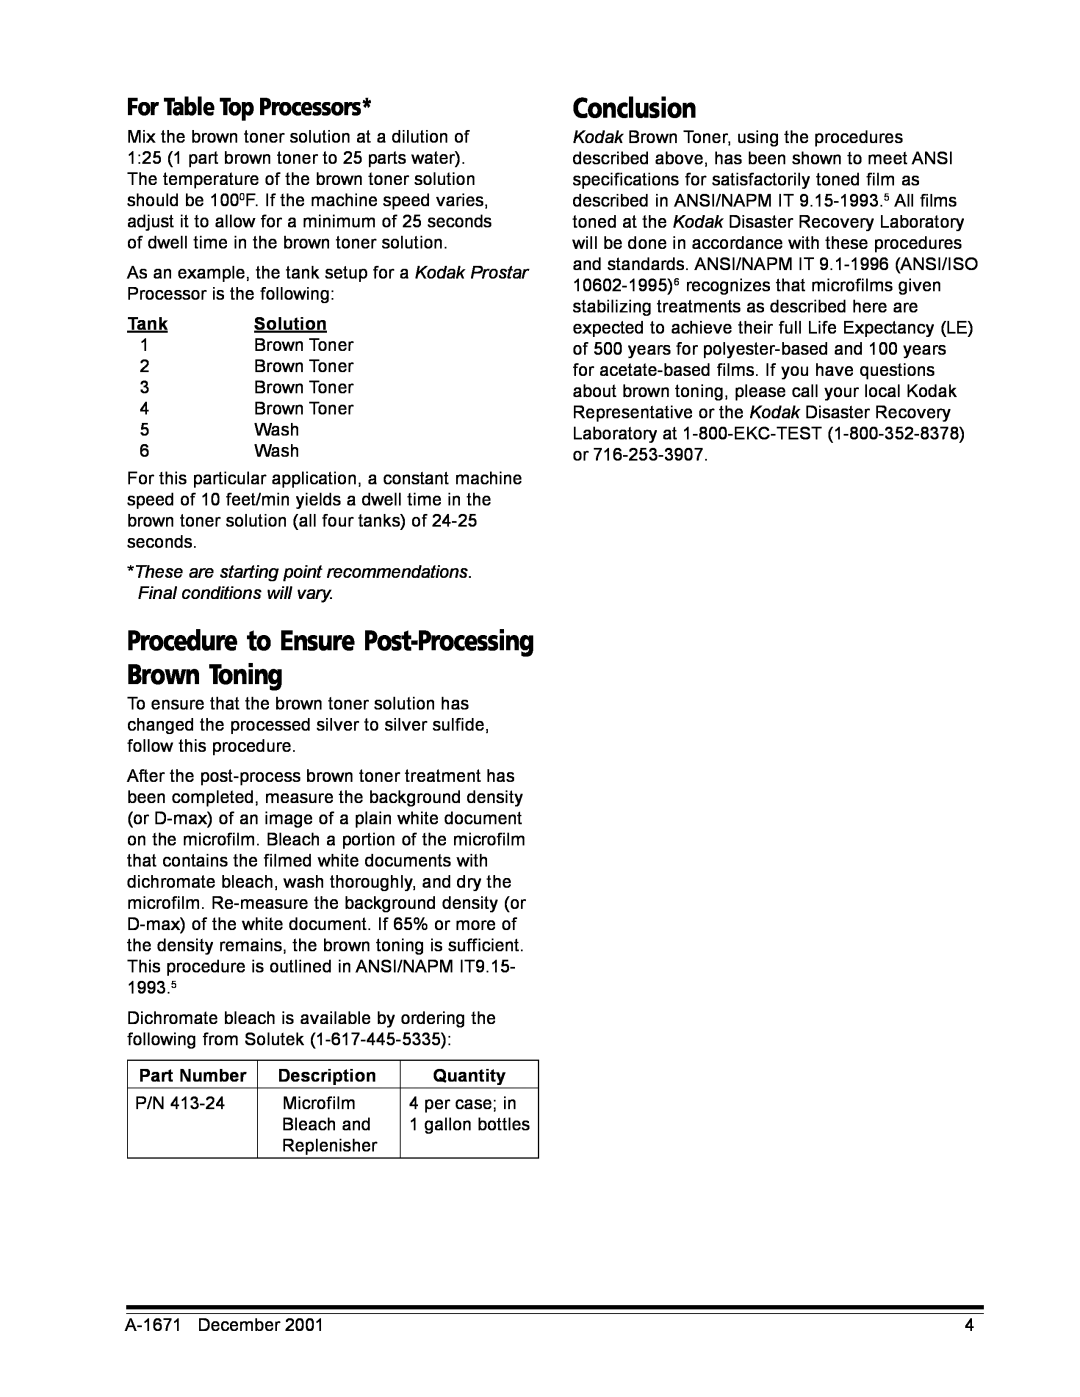 Kodak A-1671 manual Conclusion, For Table Top Processors, Tank Solution, Part Number, Description, Quantity 